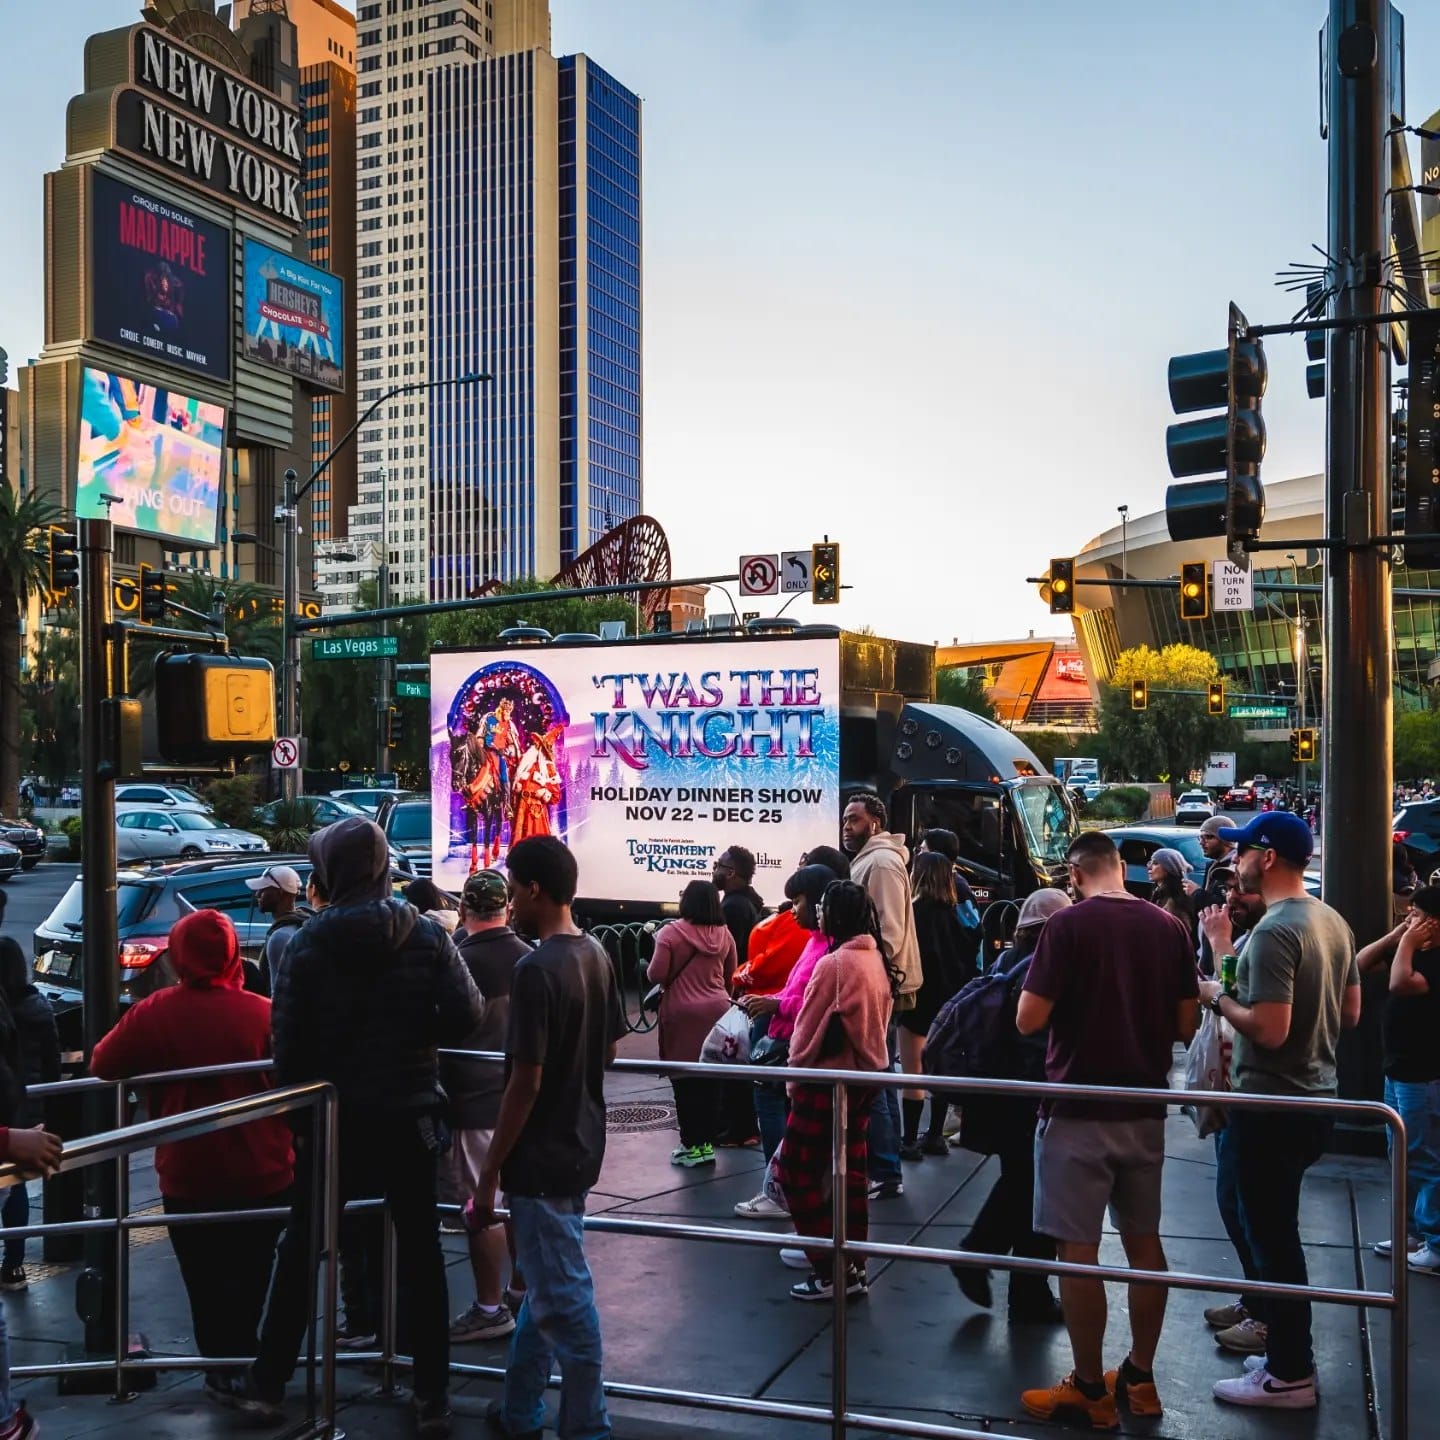 Crowd near Las Vegas show advertisement.